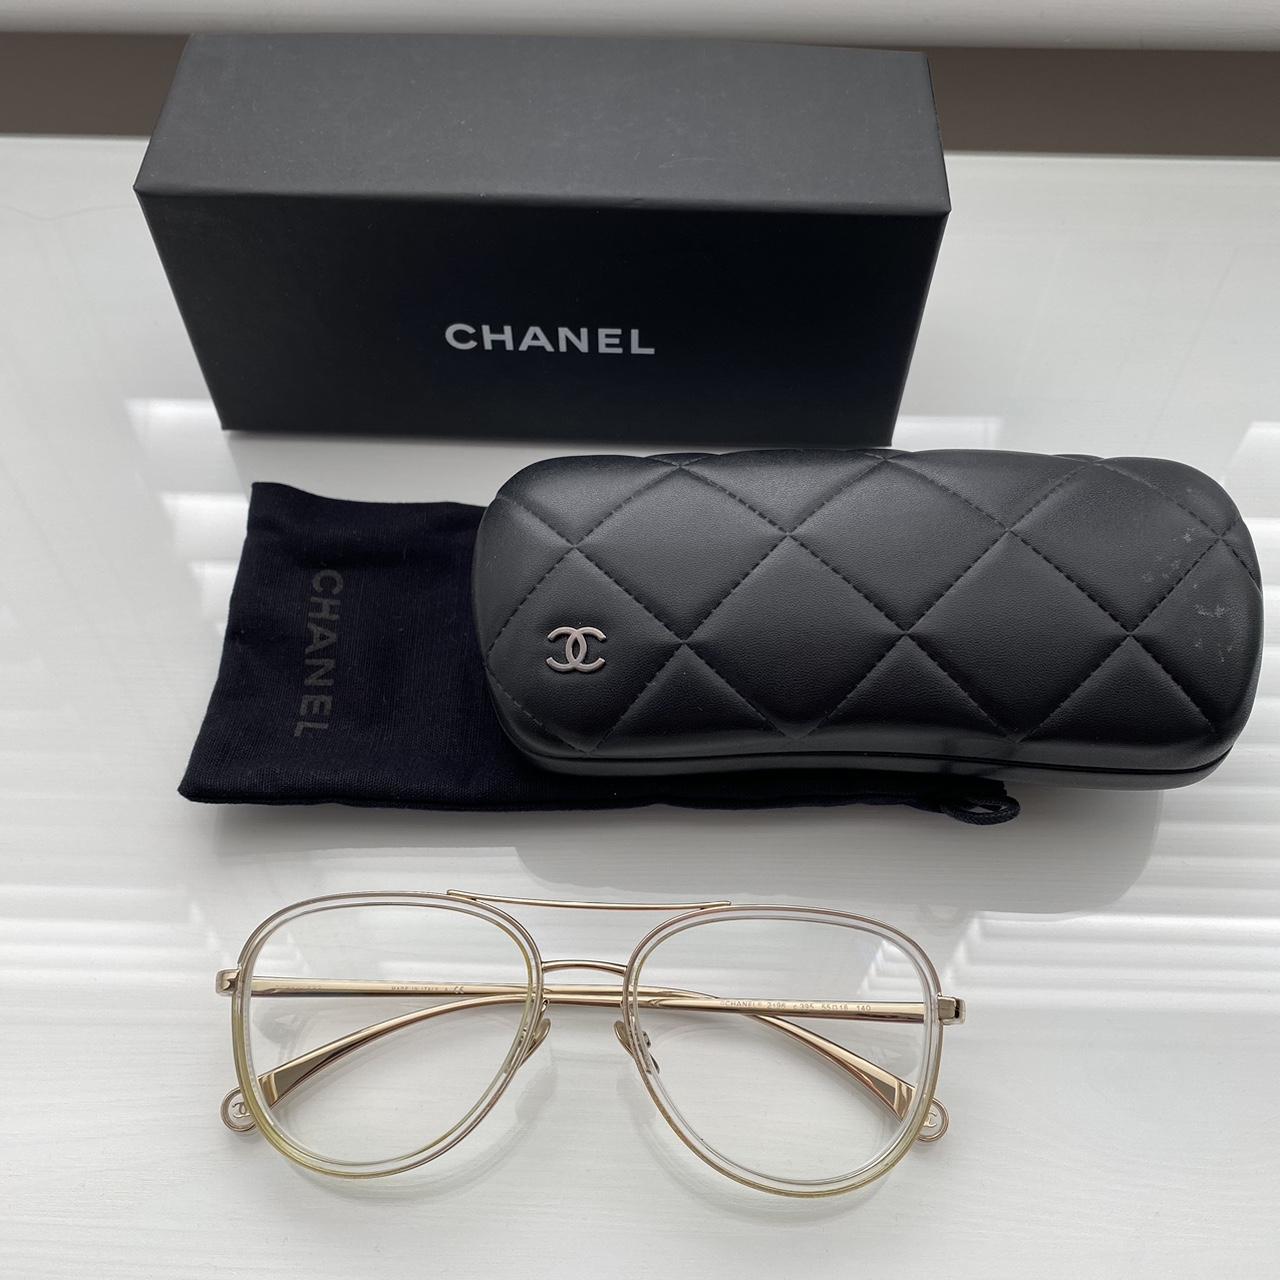 Chanel - Pilot Eyeglasses - Tortoise - Chanel Eyewear - Avvenice